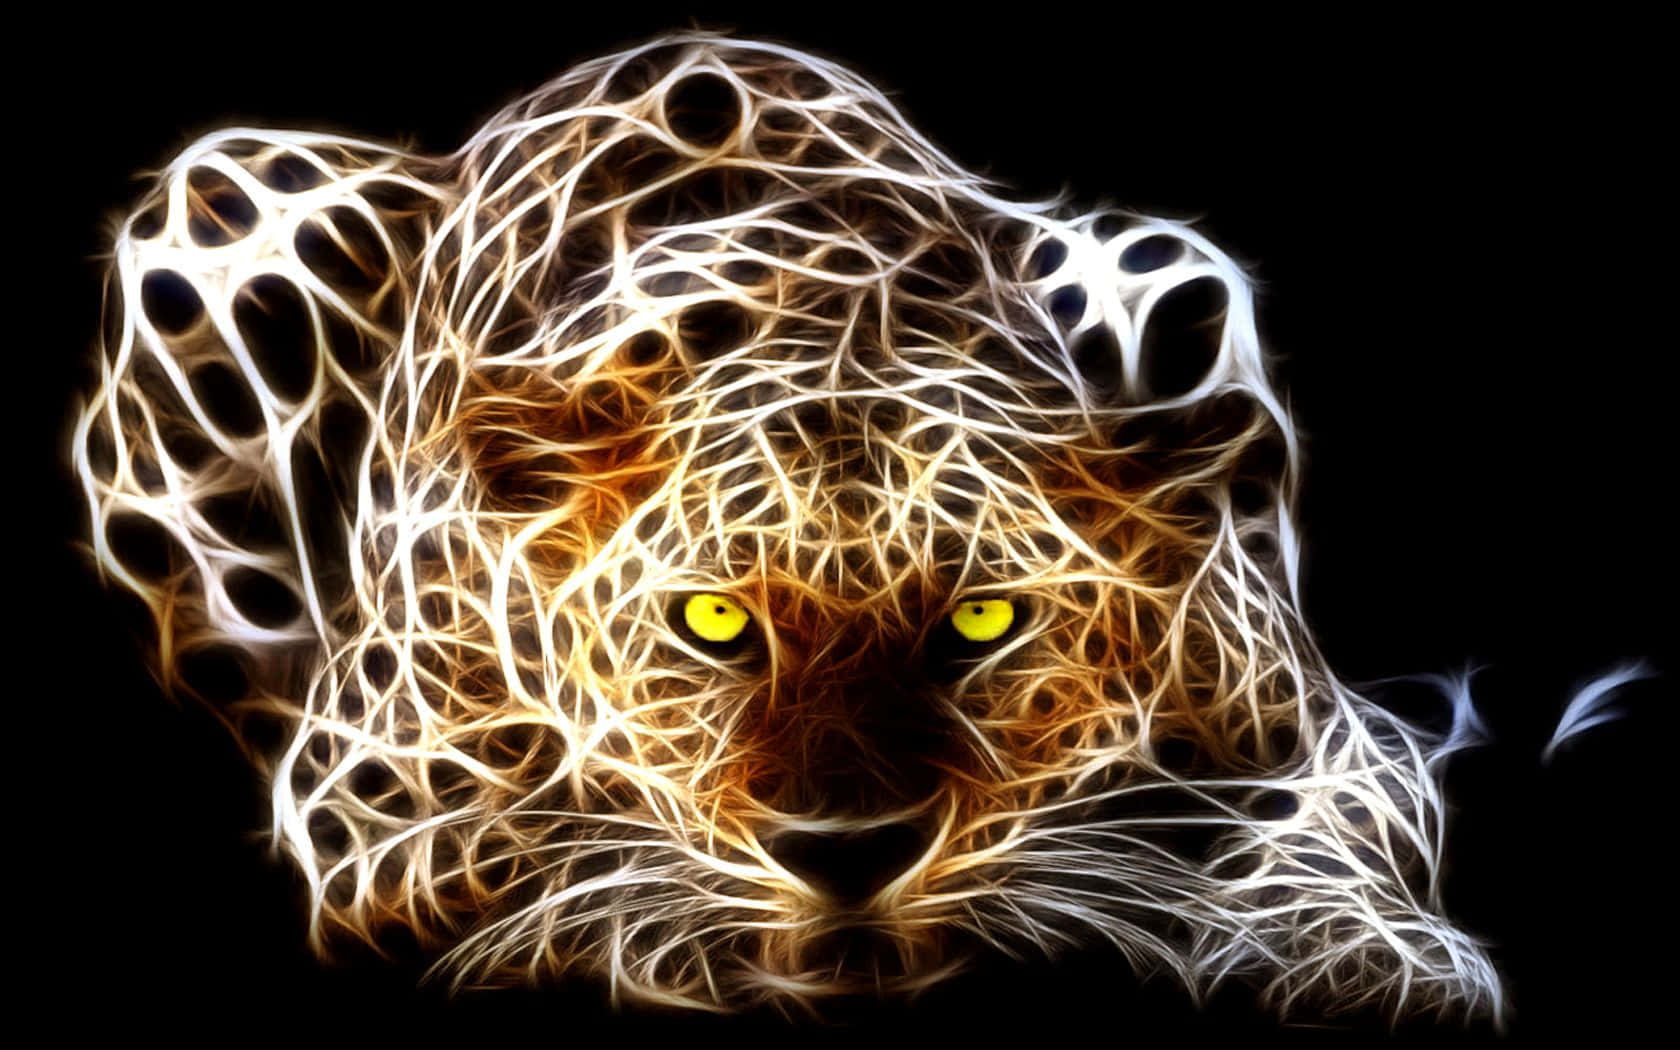 Envild Cheetah I Deres Naturlige Habitat.